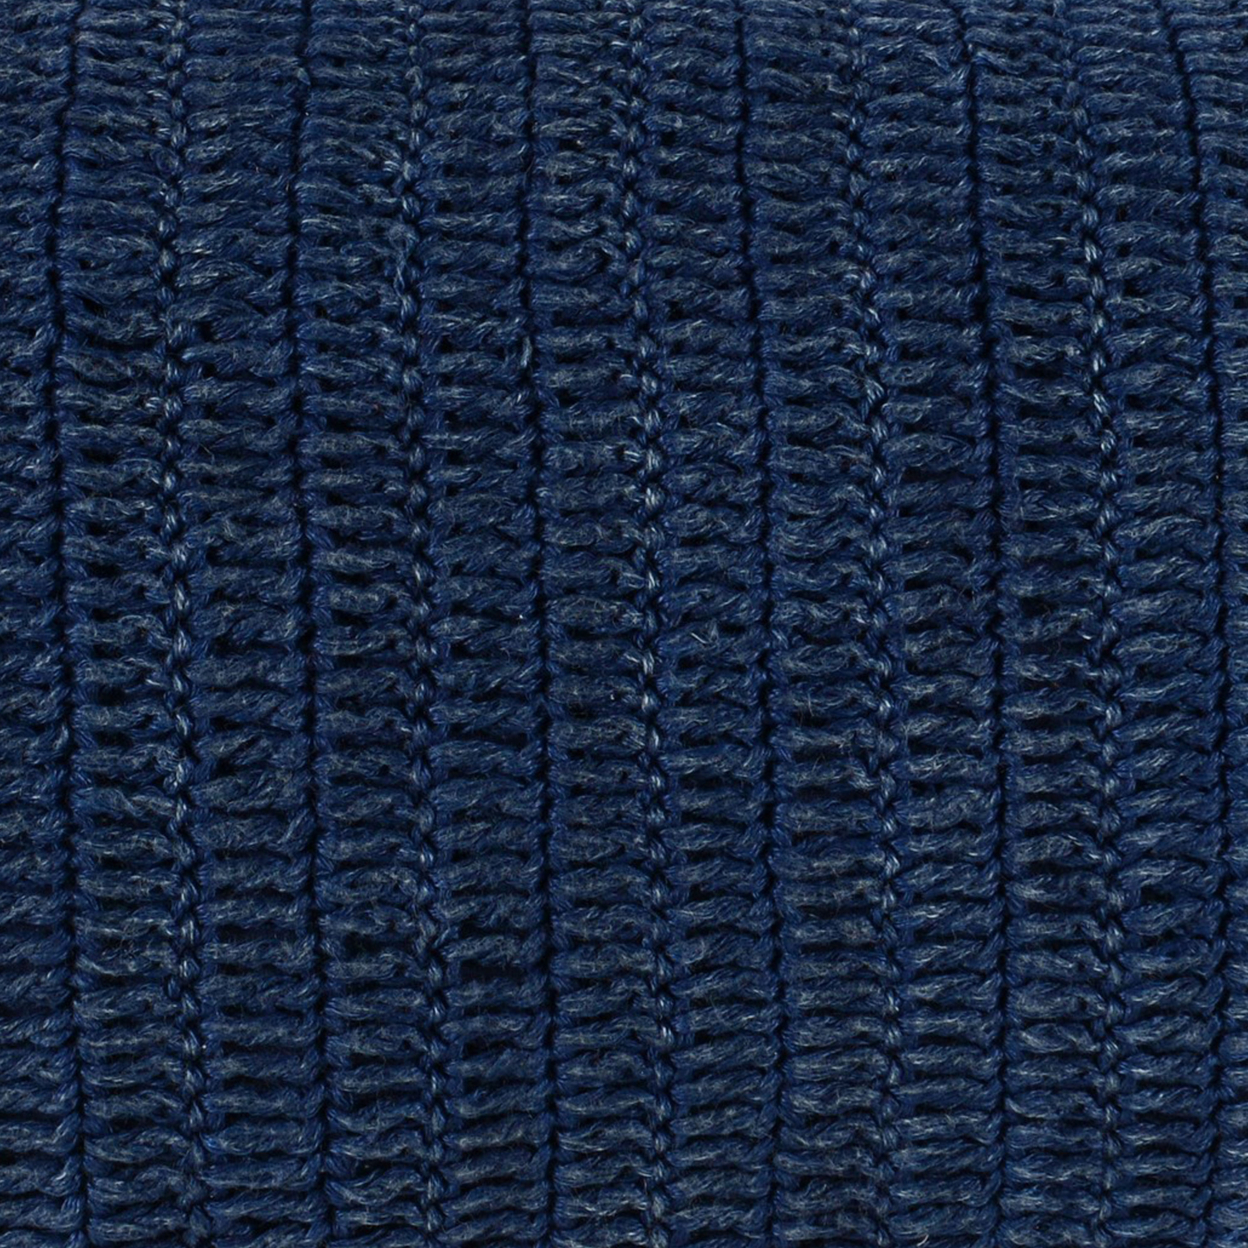 Rectangular Fabric Throw Pillow With Hand Knit Details And Knife Edges,Blue- Saltoro Sherpi